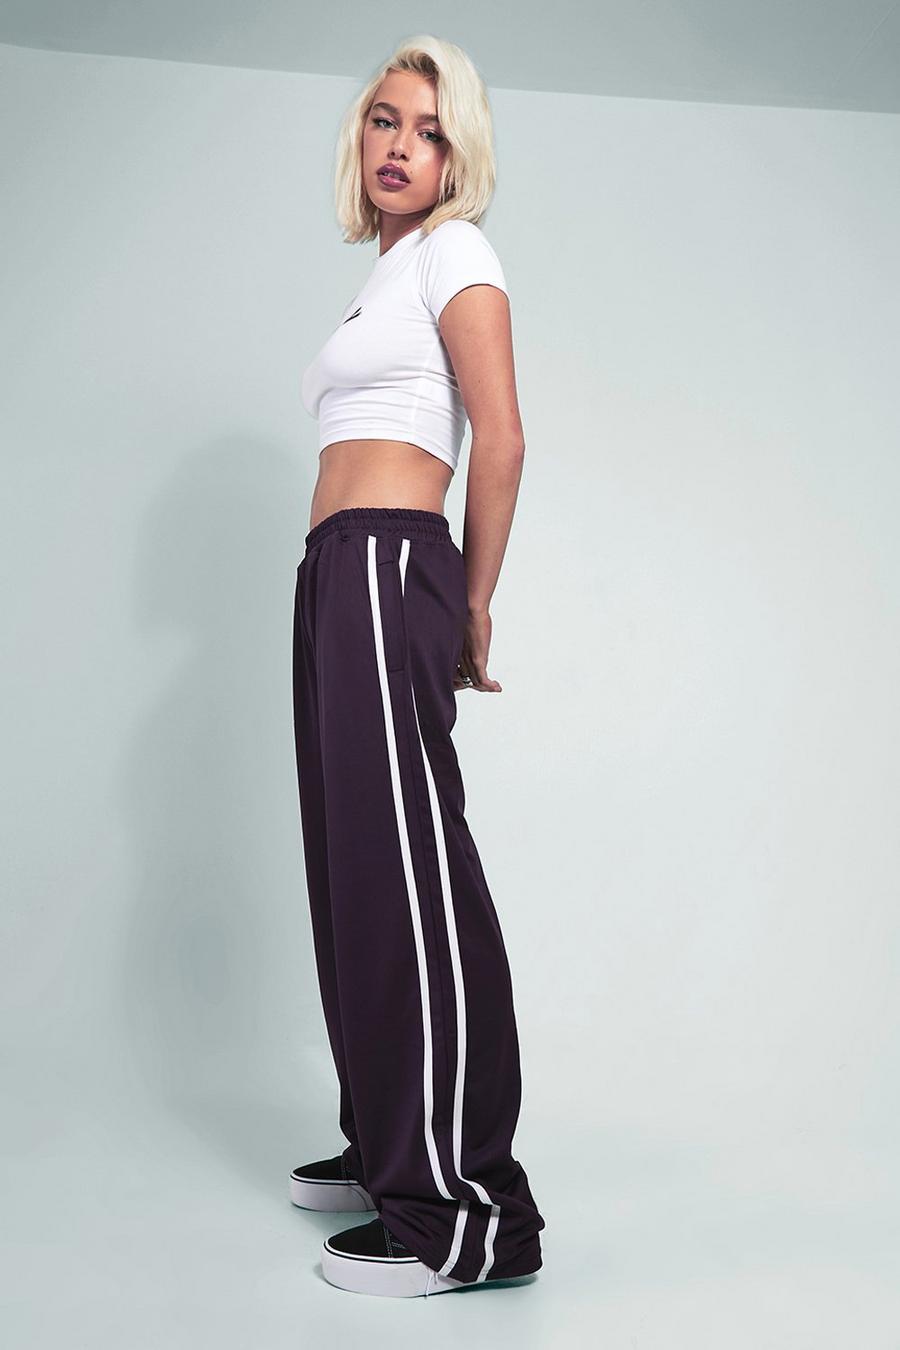 Kourtney Kardashian Barker - Pantalón deportivo de pernera ancha con estampado Barker , Purple viola